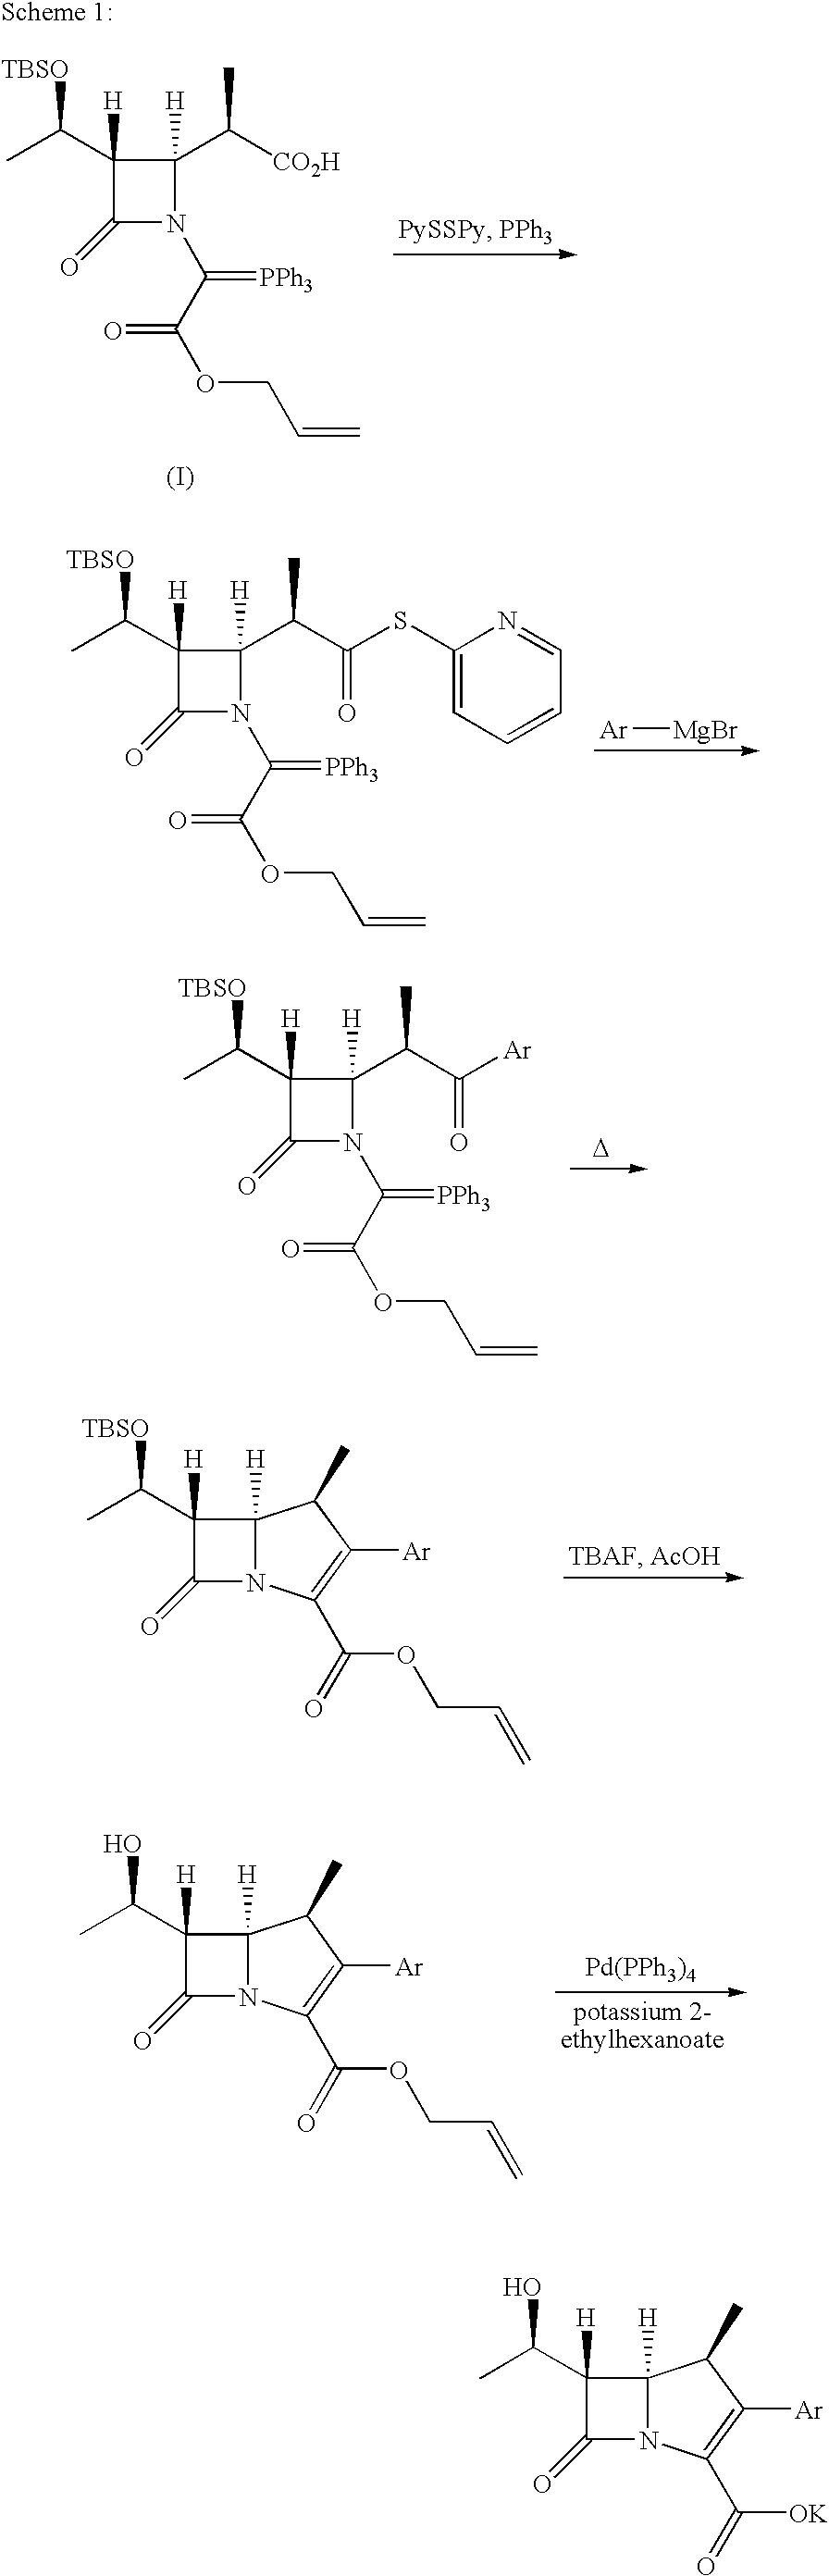 Crystalline carbapenem intermediate